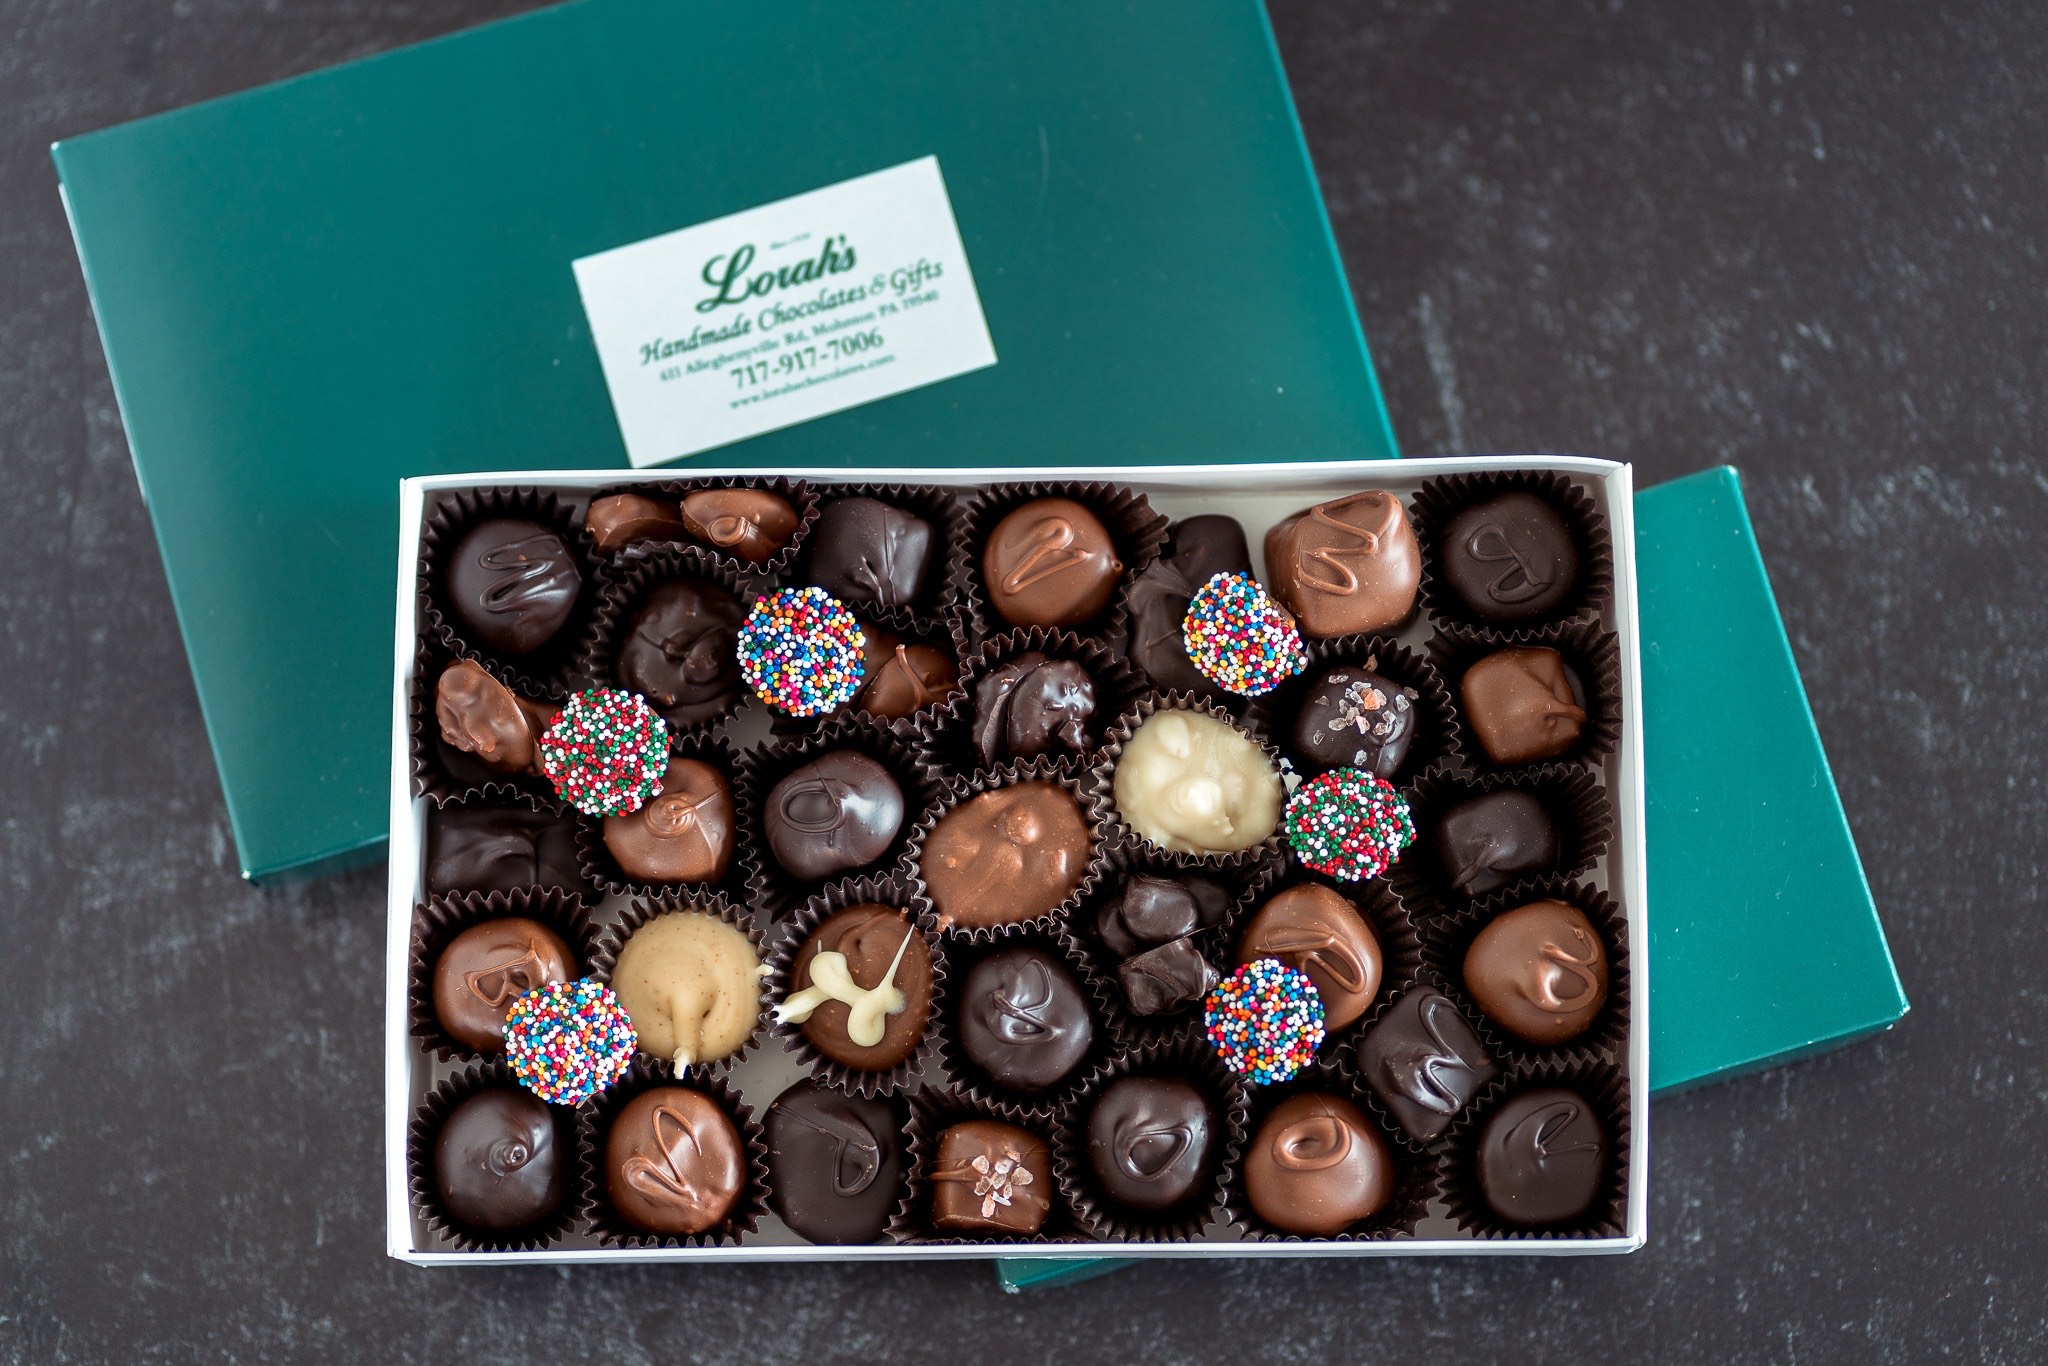 Box of Assorted Handmade Chocolates by Lorah's Handmade Chocoaltes